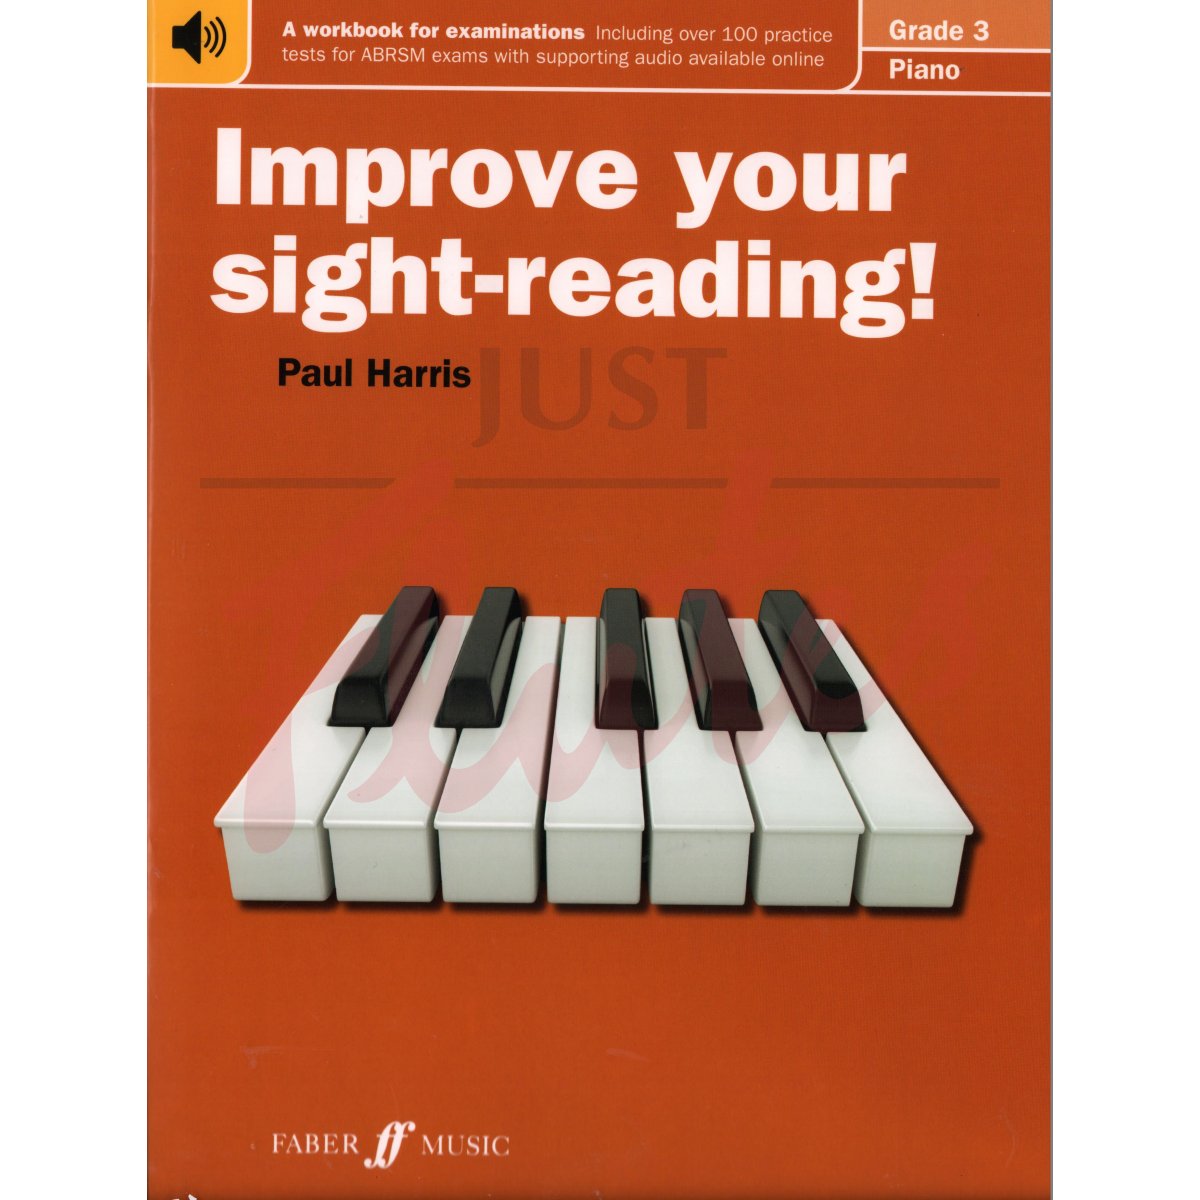 Improve Your Sight-Reading! [Piano] Grade 3